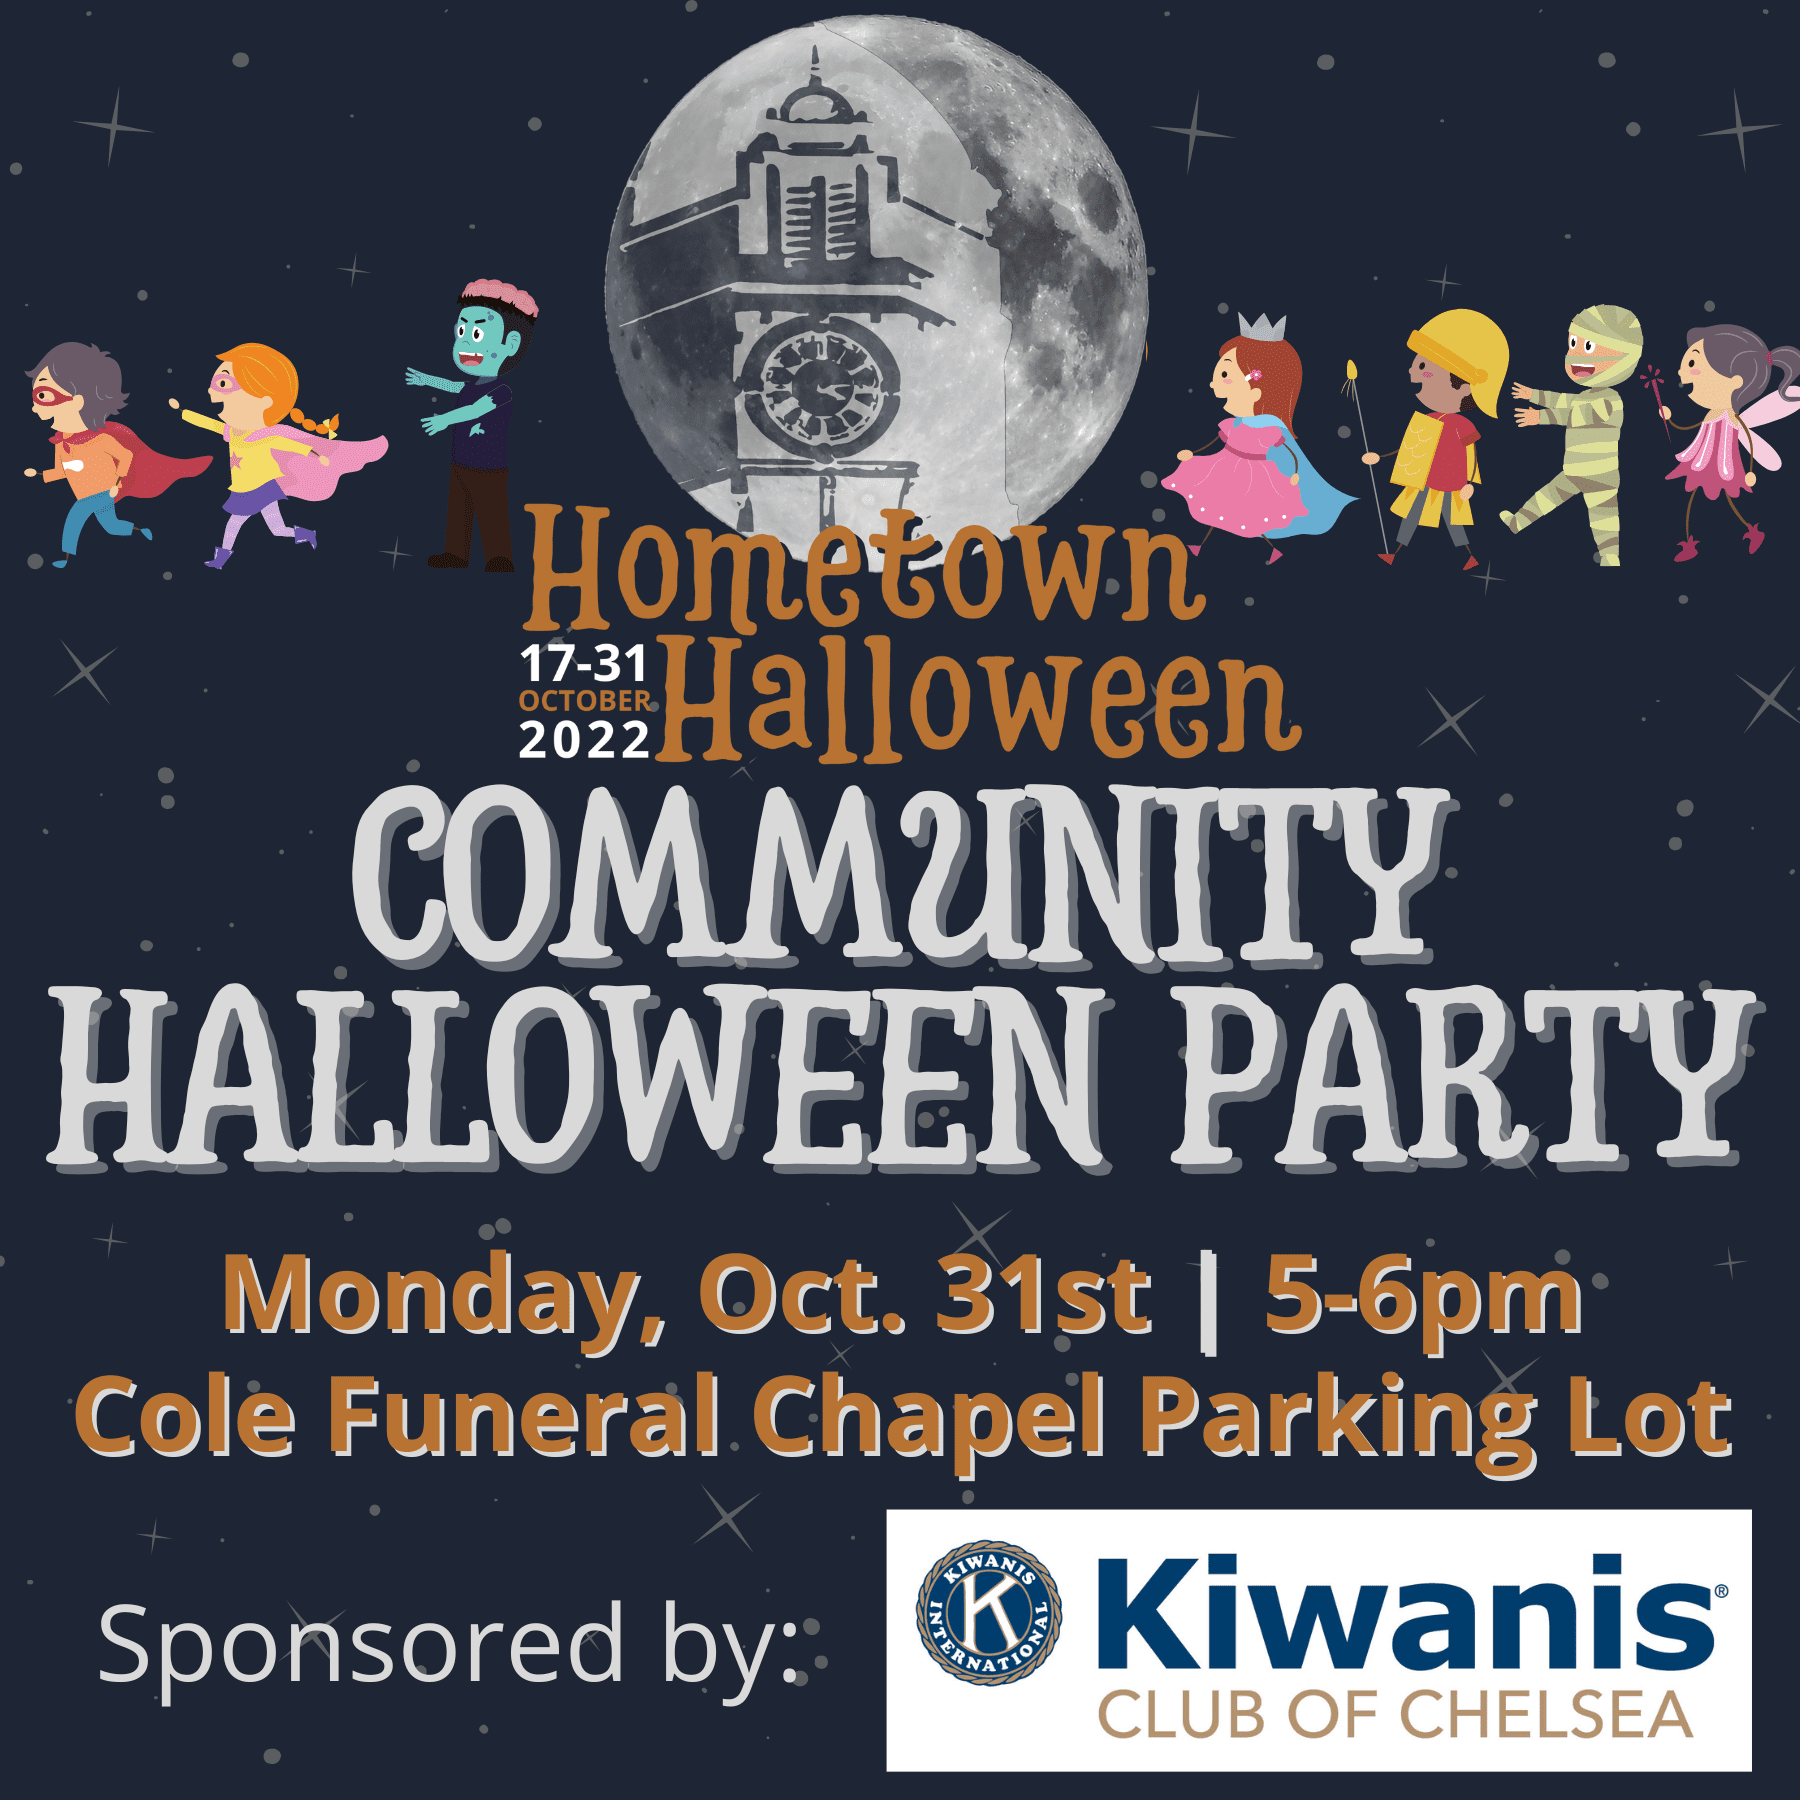 Community Halloween Party